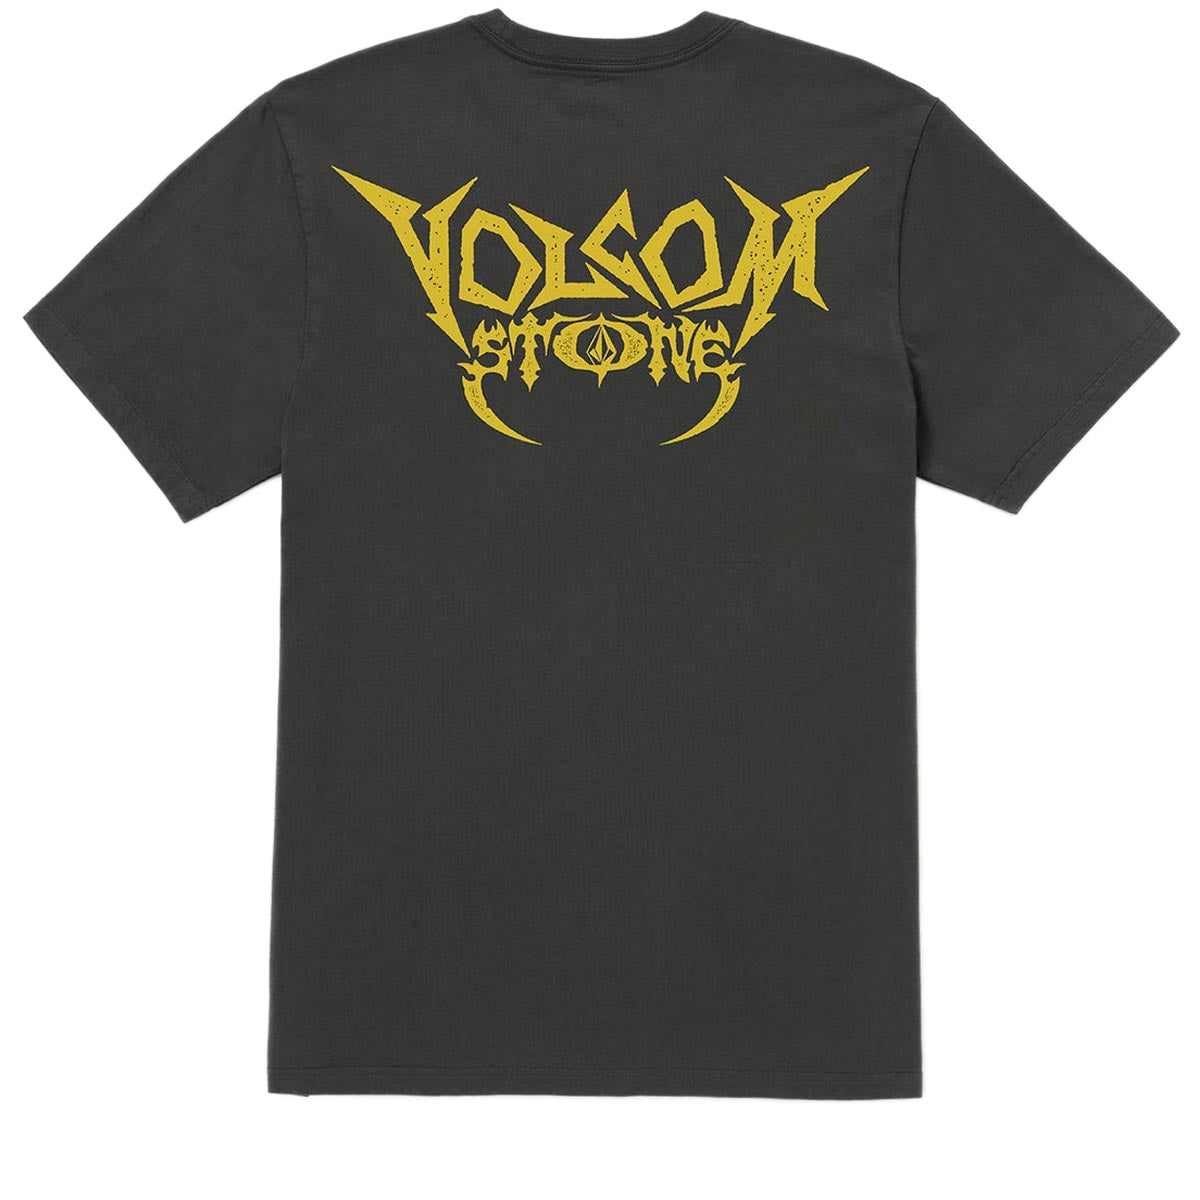 Volcom Hot Headed T-Shirt - Stealth image 2